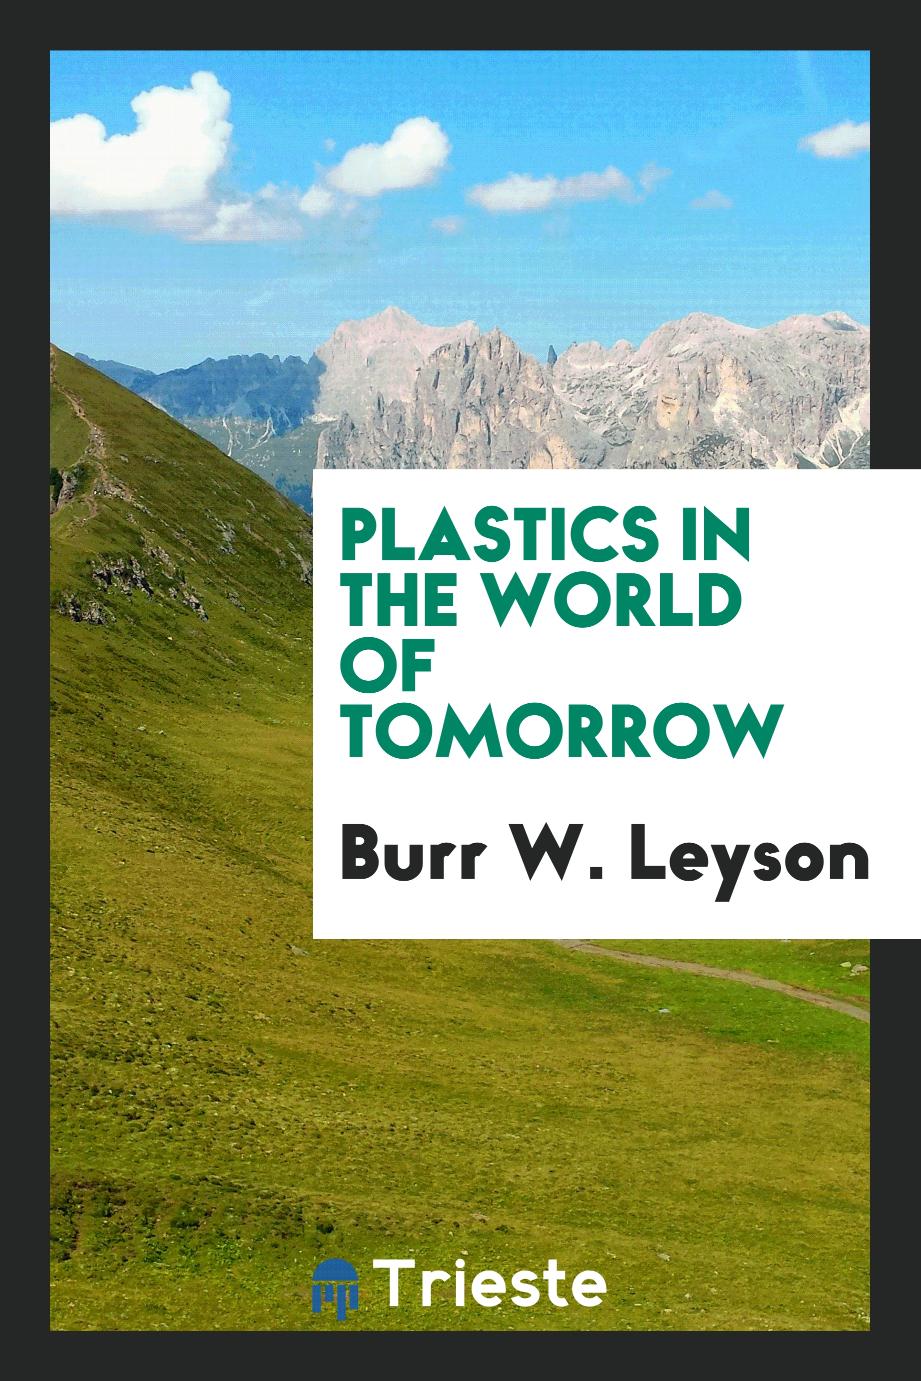 Plastics in the world of tomorrow